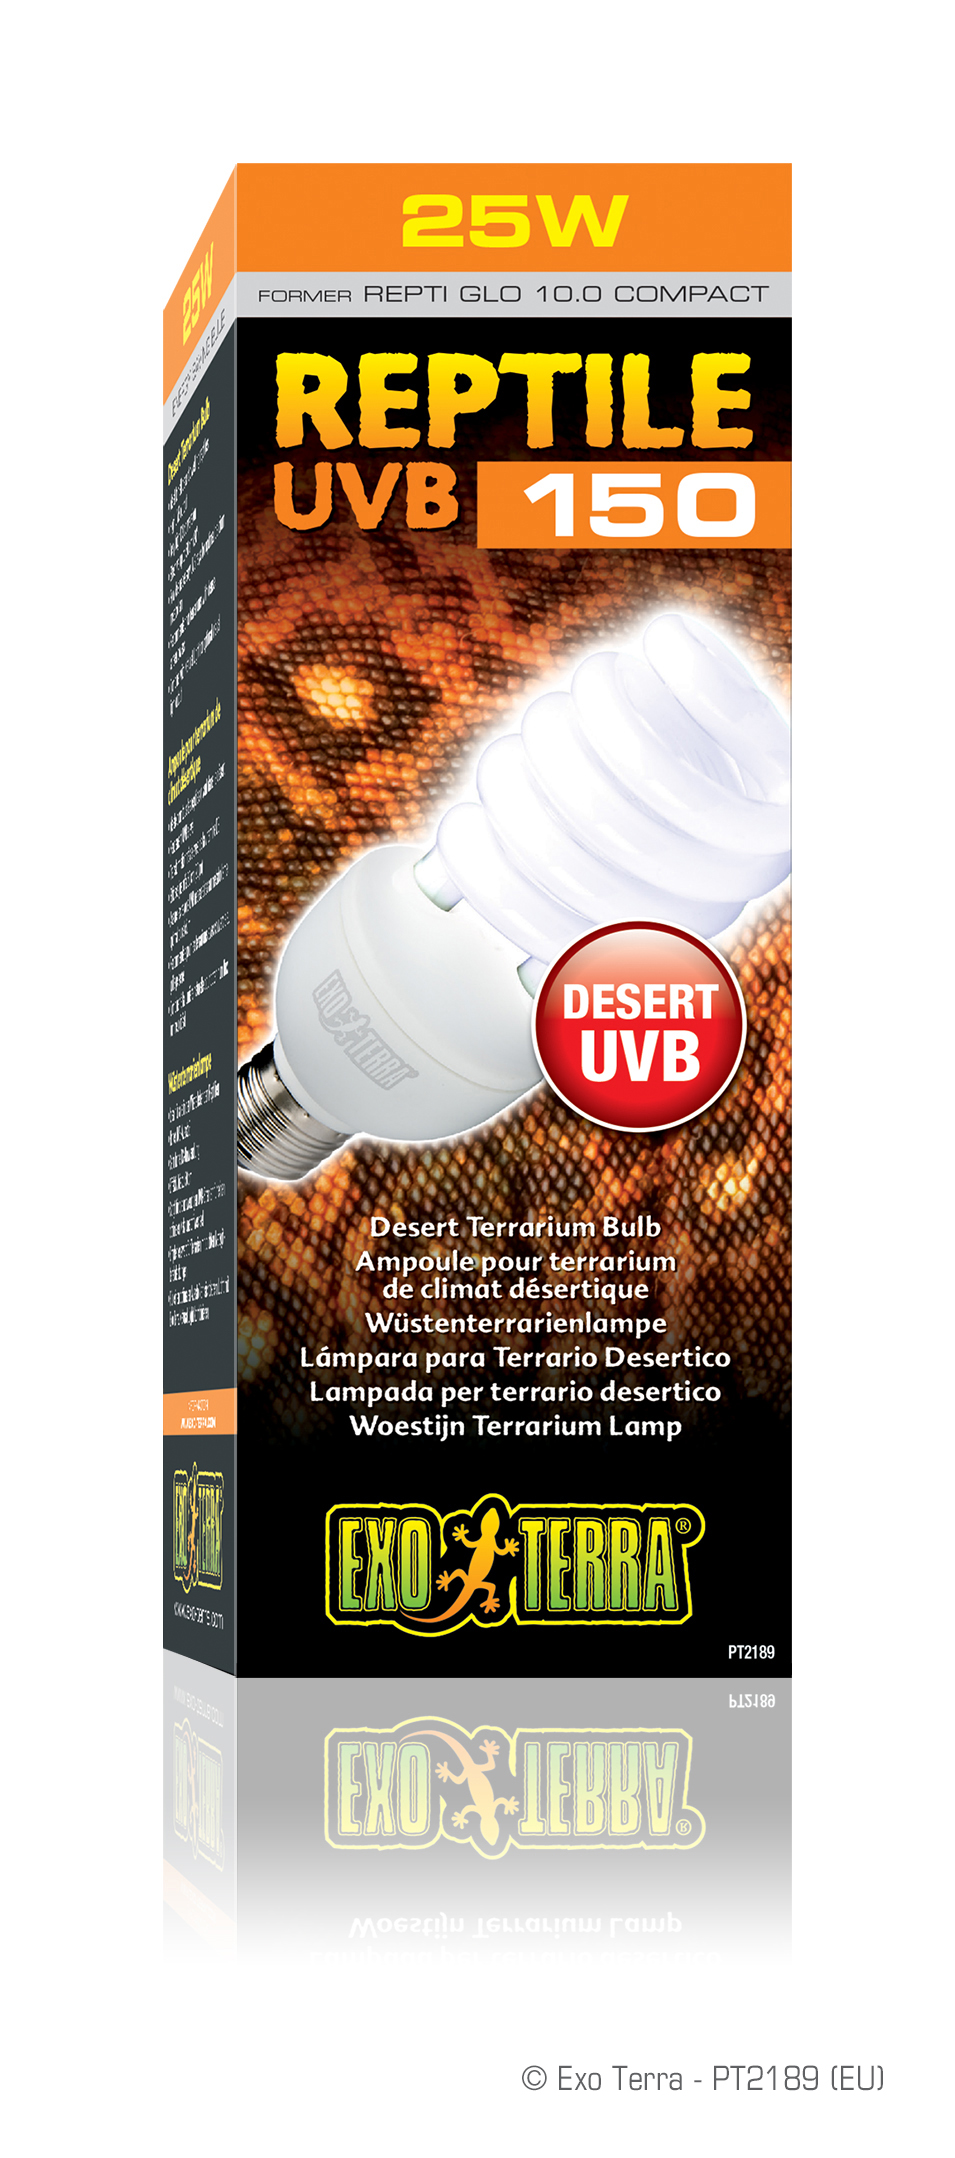 EXO TERRA Reptile UVB 150 25W (PT2189) Desert Terrarium Bulb 